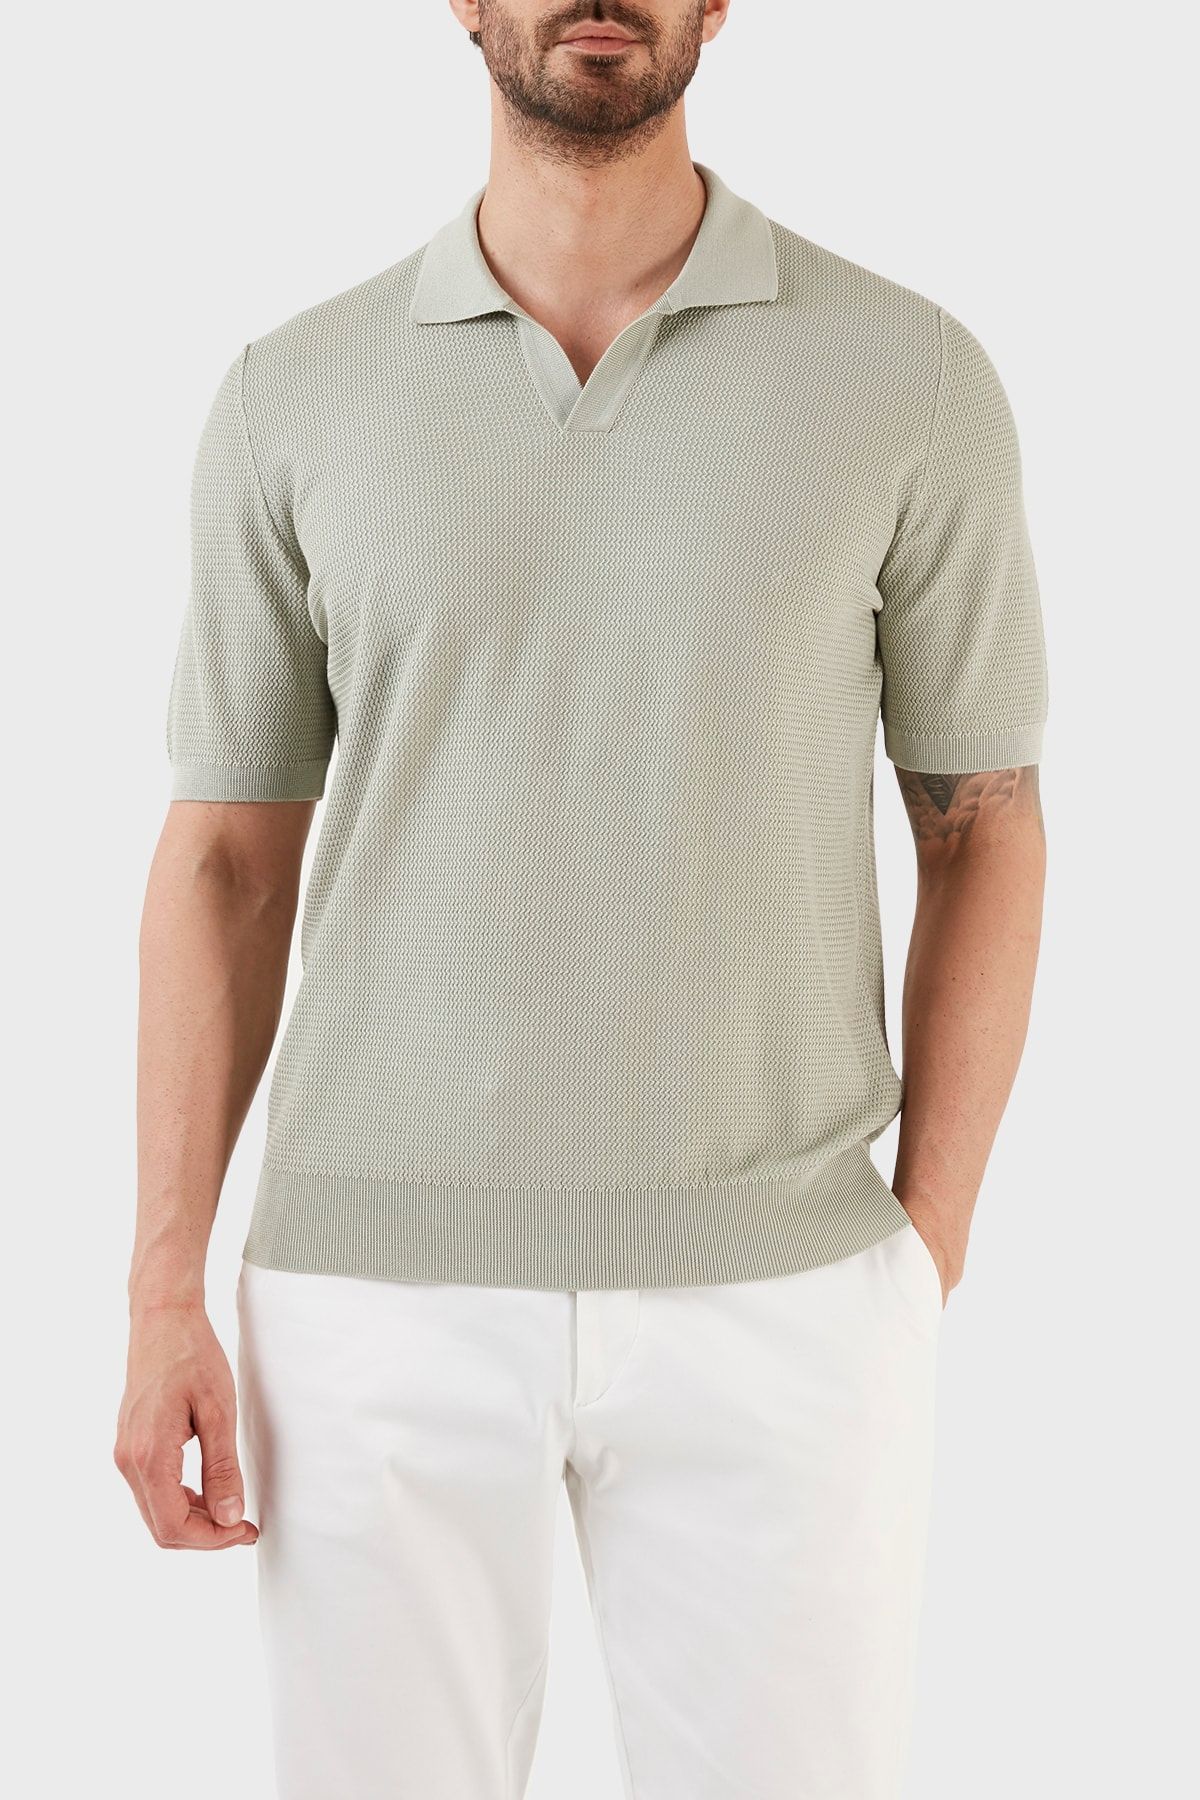 GRAN SASSO Ipek Ve Pamuk Karışımlı Regular Fit Polo T Shirt Erkek Polo T Shirt 43171 16221 412